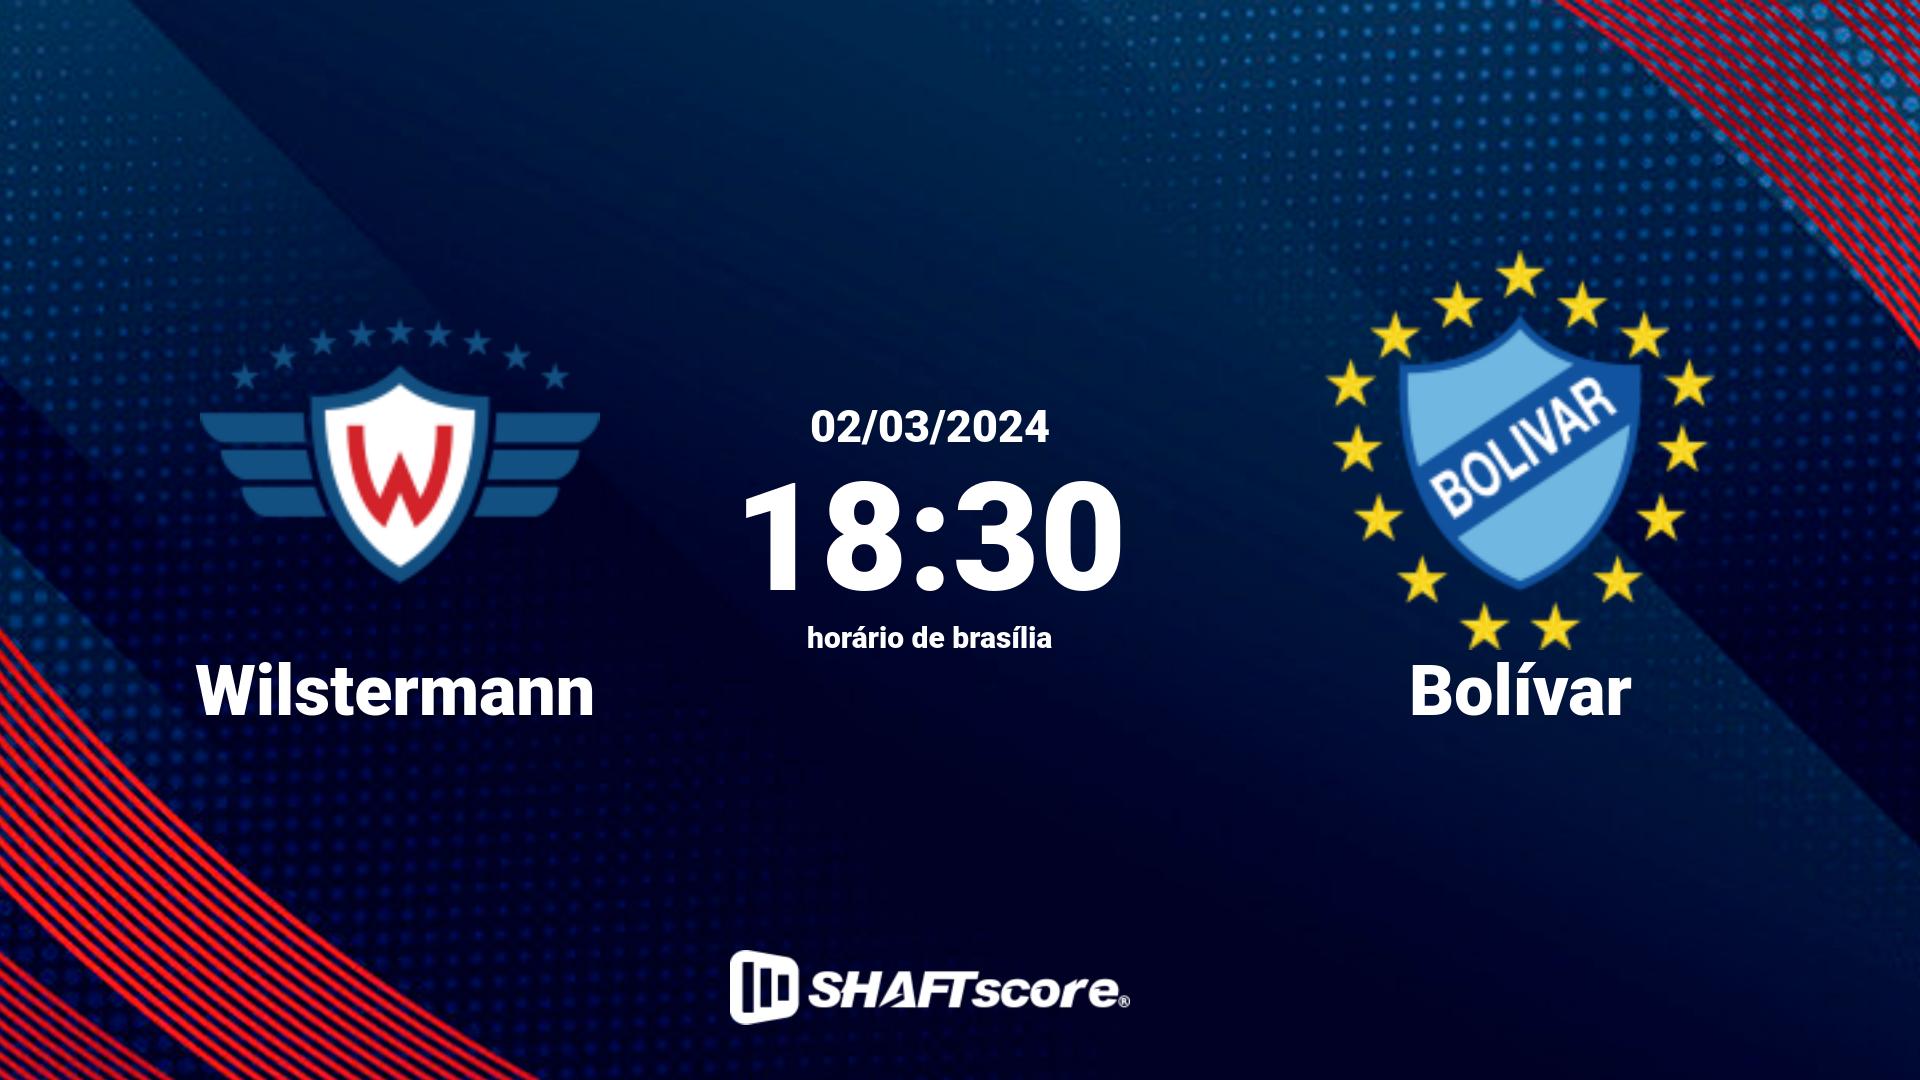 Estatísticas do jogo Wilstermann vs Bolívar 02.03 18:30